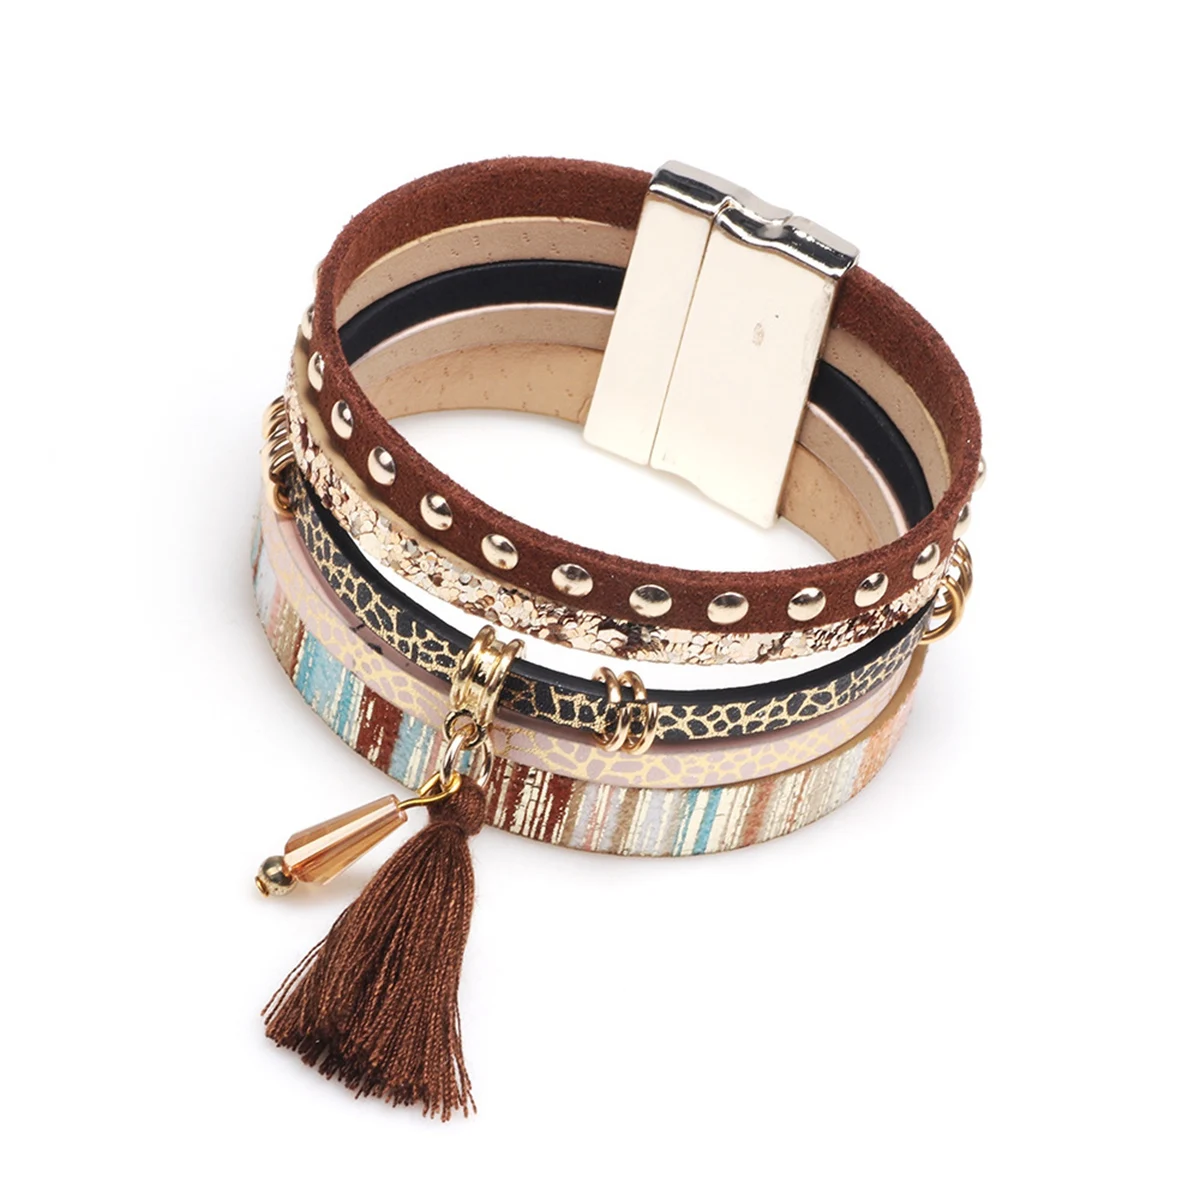 

Bohemia Women Leather Wrap Cuff Bracelet Natural Stone Druzy Multi Rope Tenns Bangle Magnetic Clasp Handmade Jewelry Girl